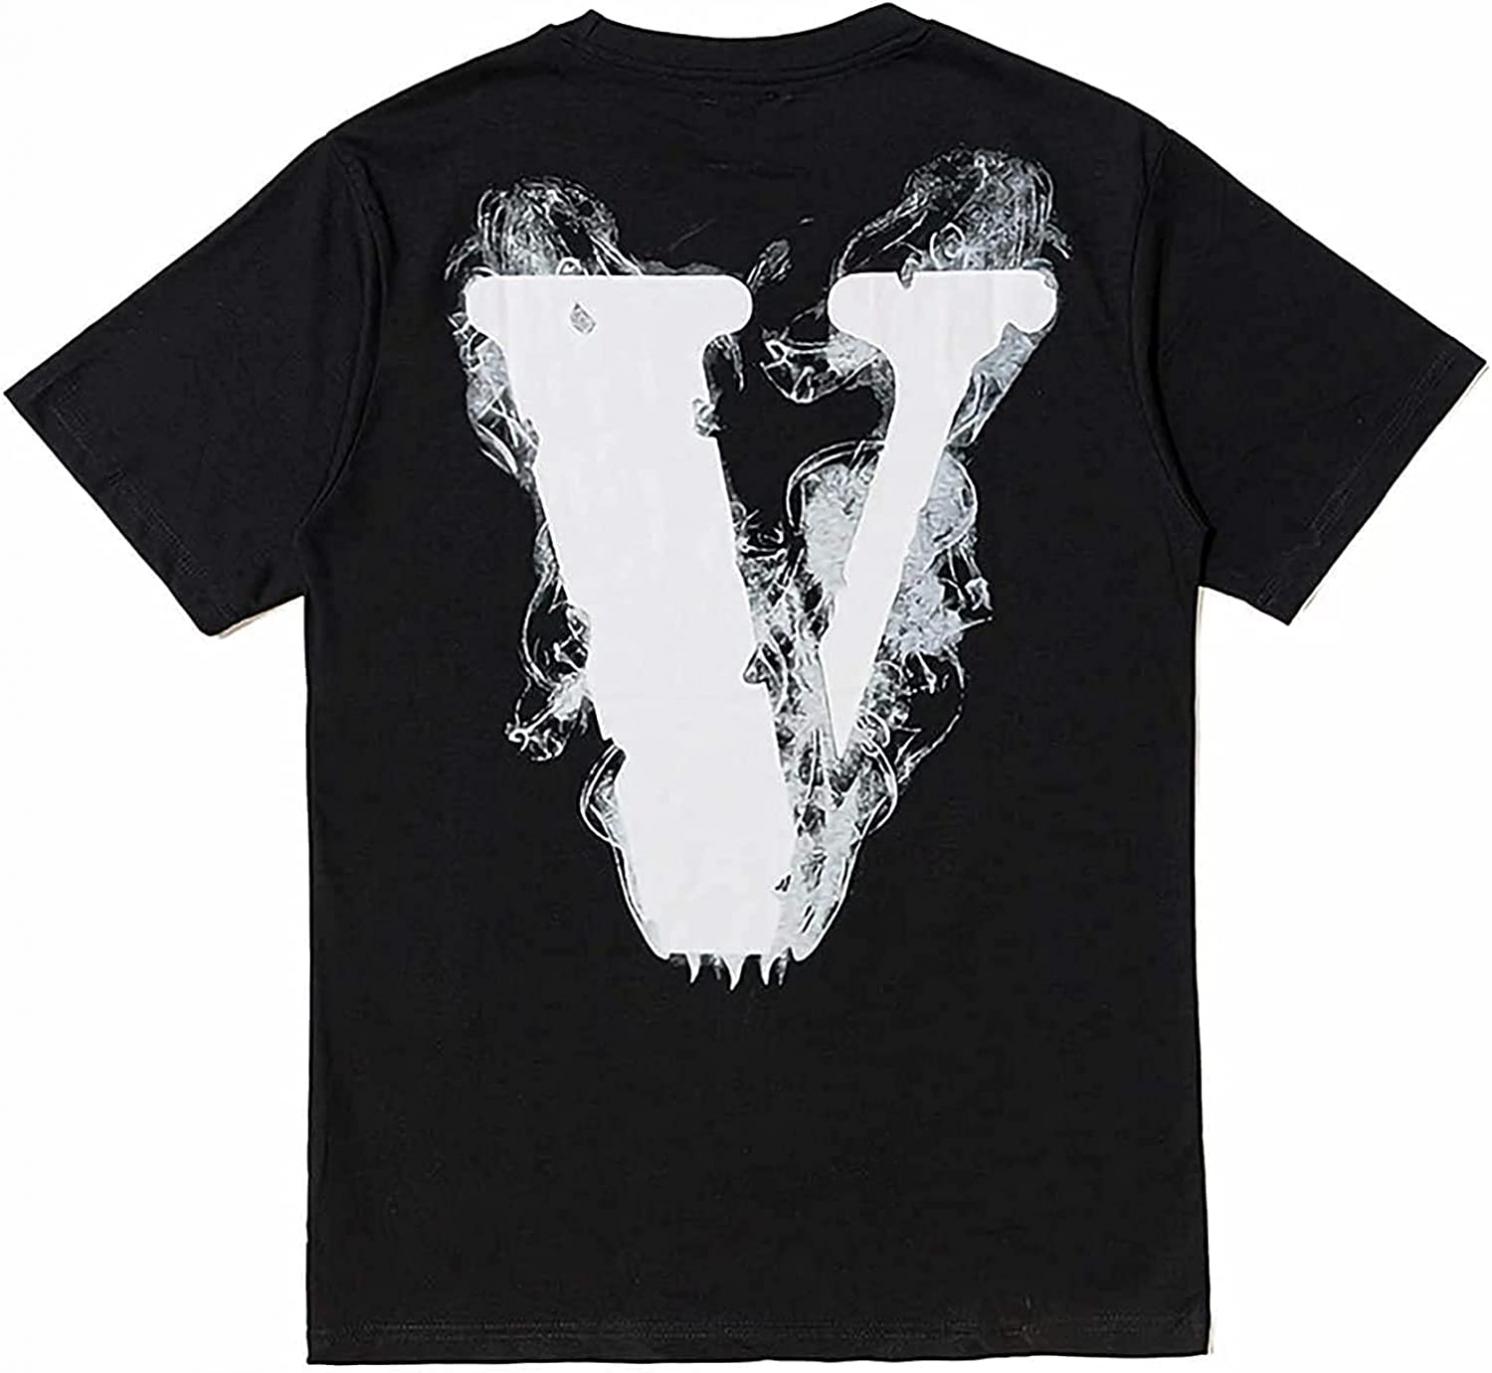 Big V Letter Shirts Men's Graphic Print T Shirt Hip Hop Short Sleeve Cotton Crew Neck Tee Tops for Men Women